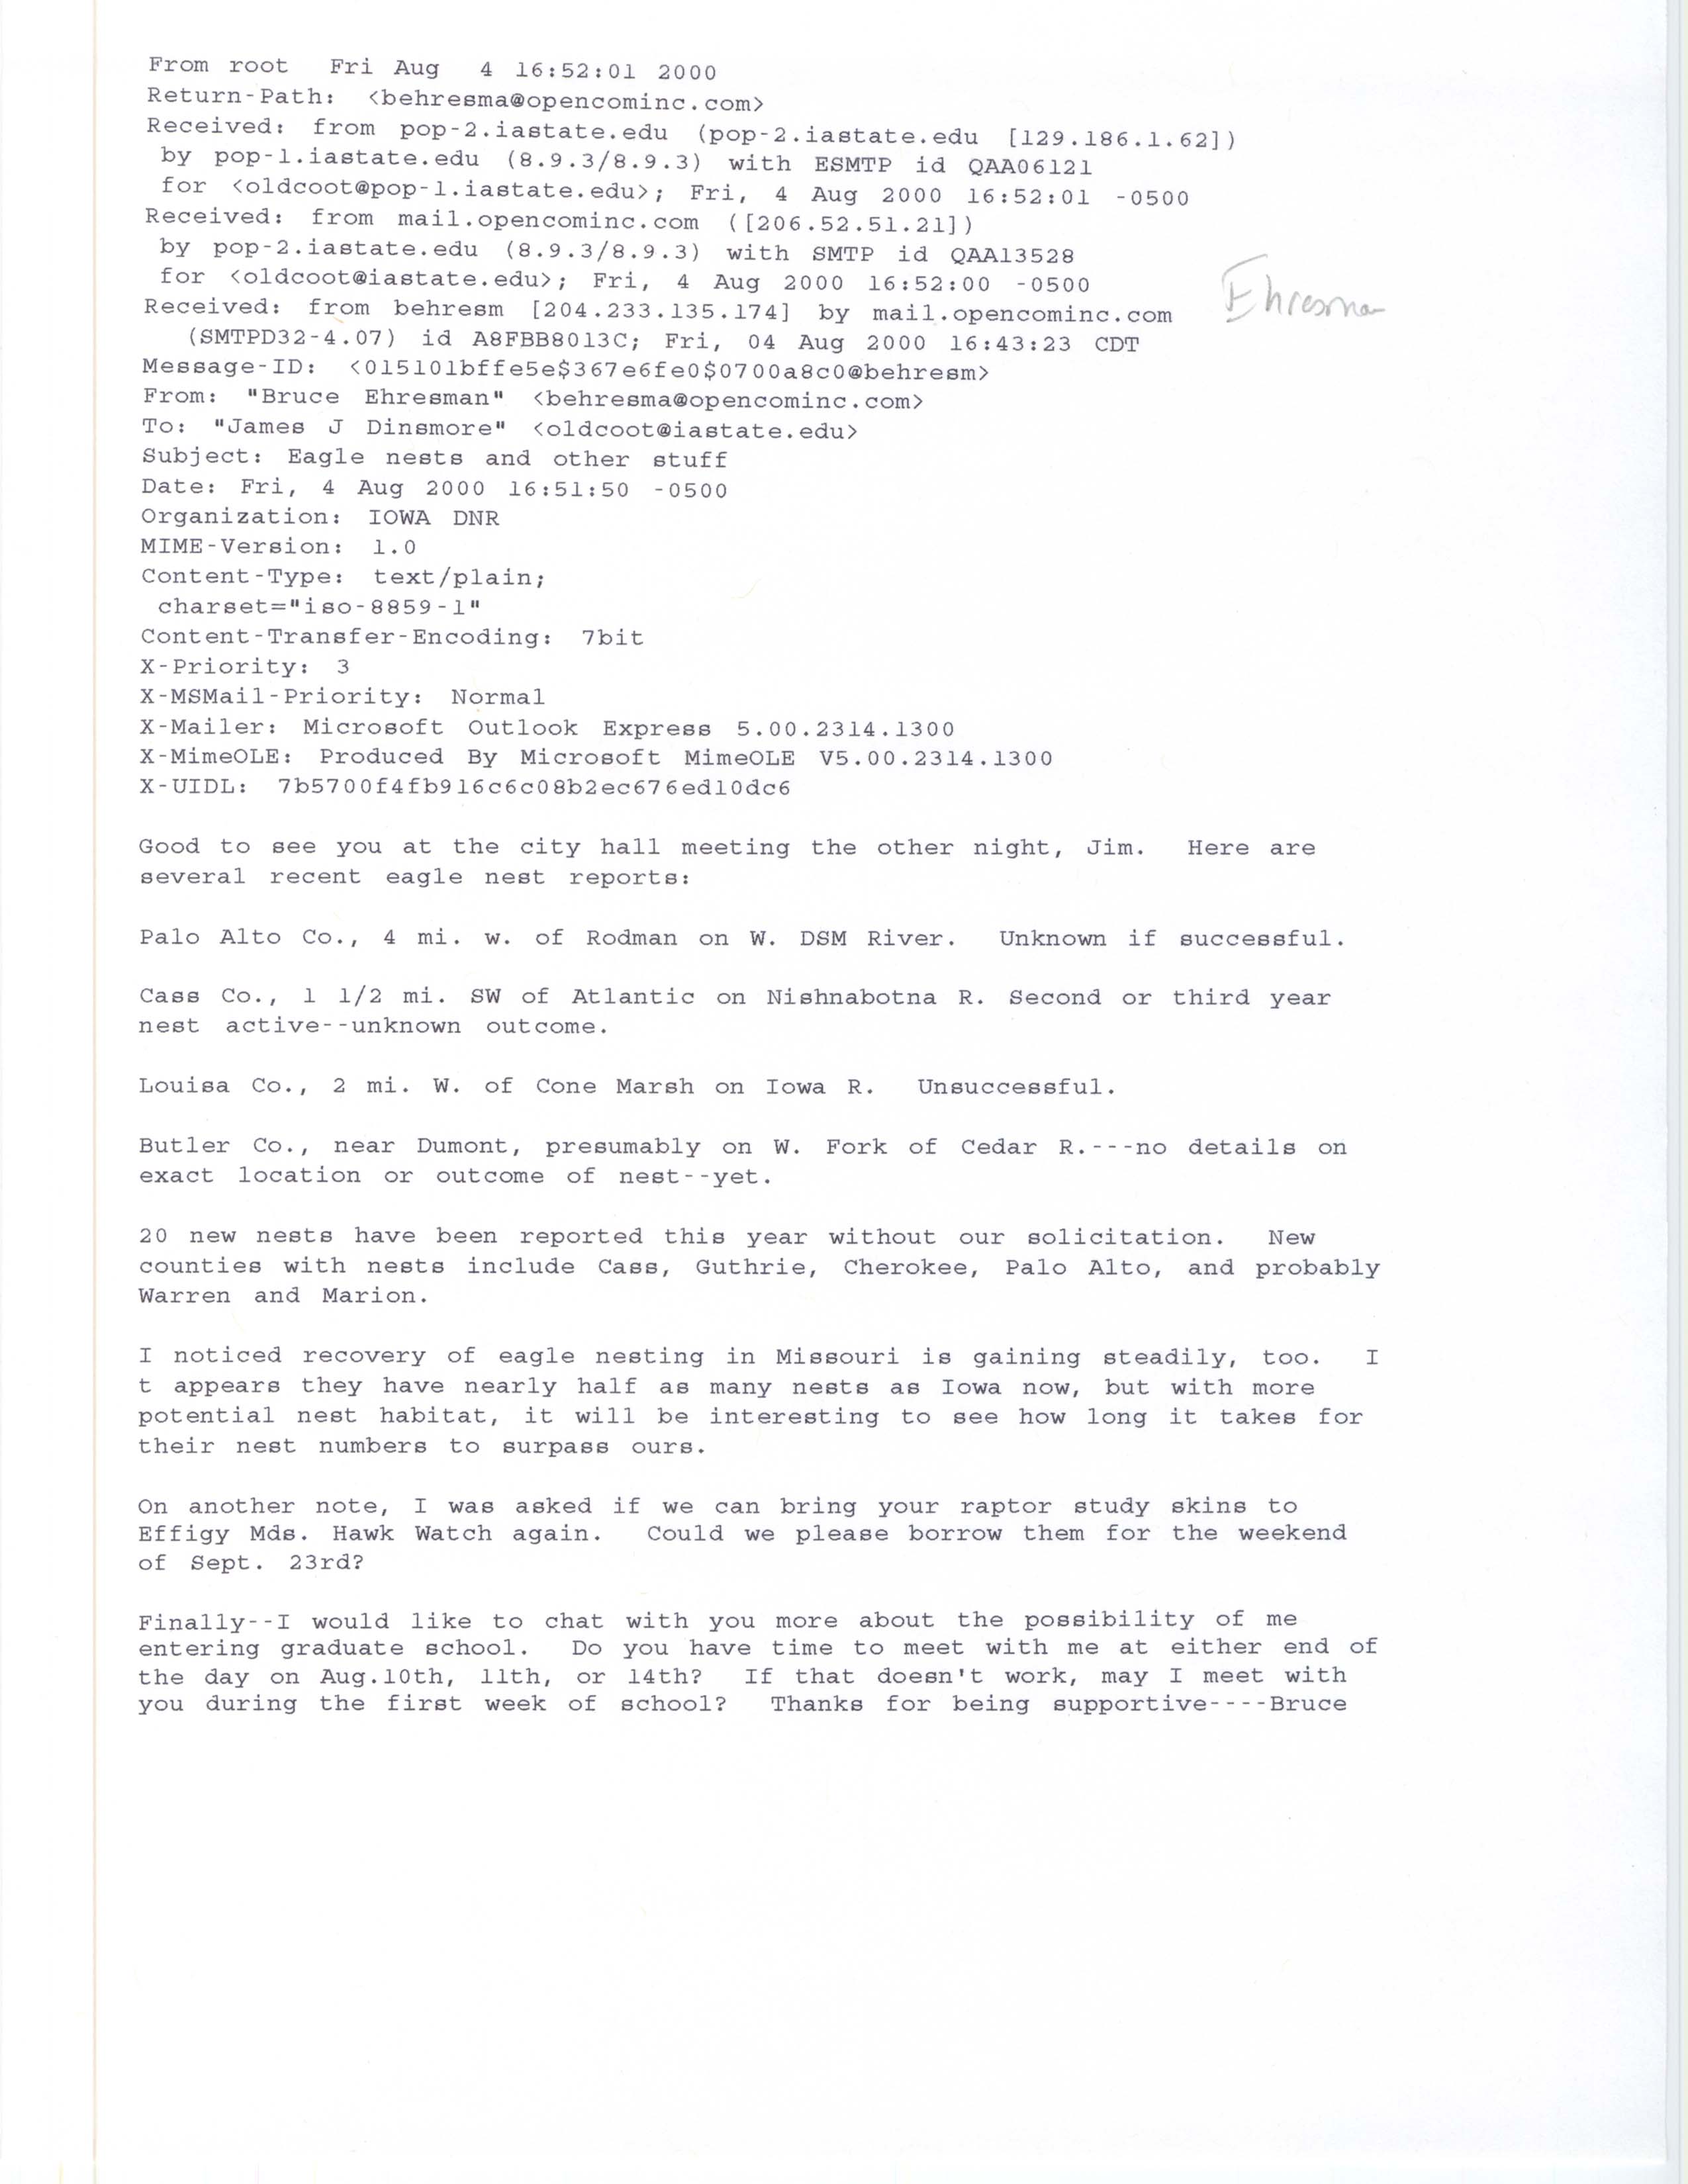 Bruce Ehresman email to James J. Dinsmore regarding Bald Eagle nest locations, August 4, 2000